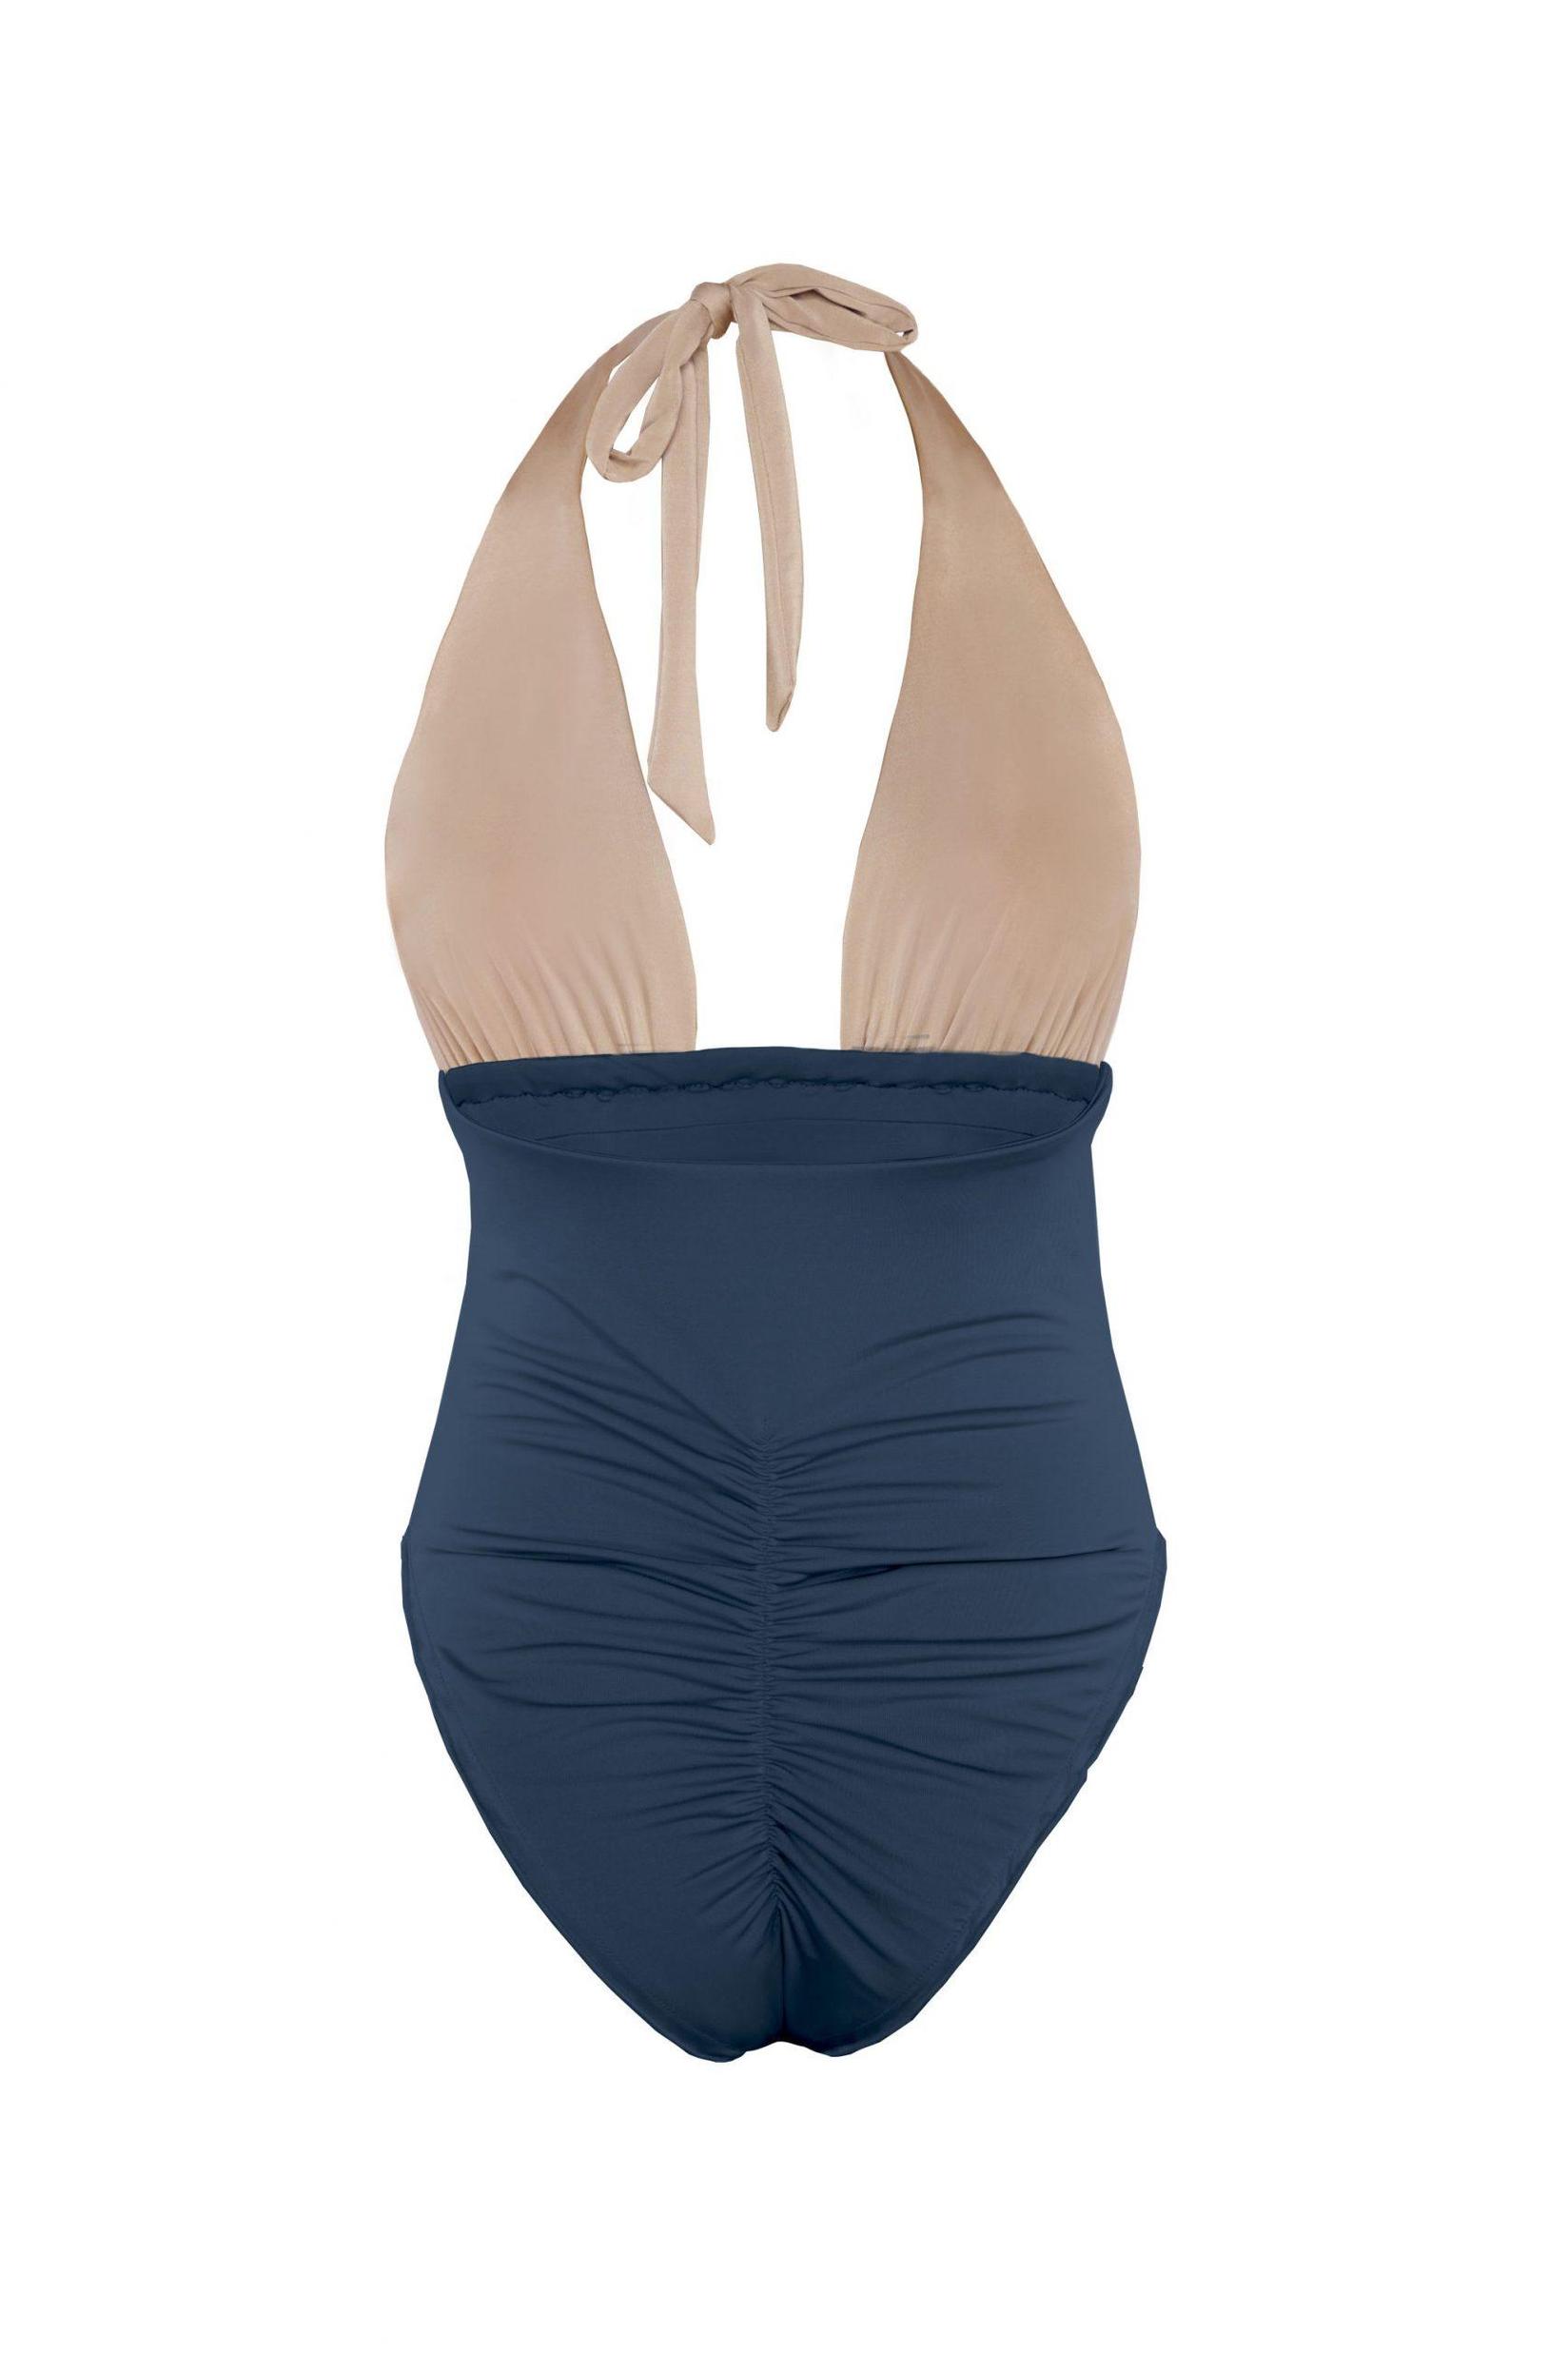 Selected image for DEVI COLLECTION Ženski jednodelni kupaći kostim Devi teget